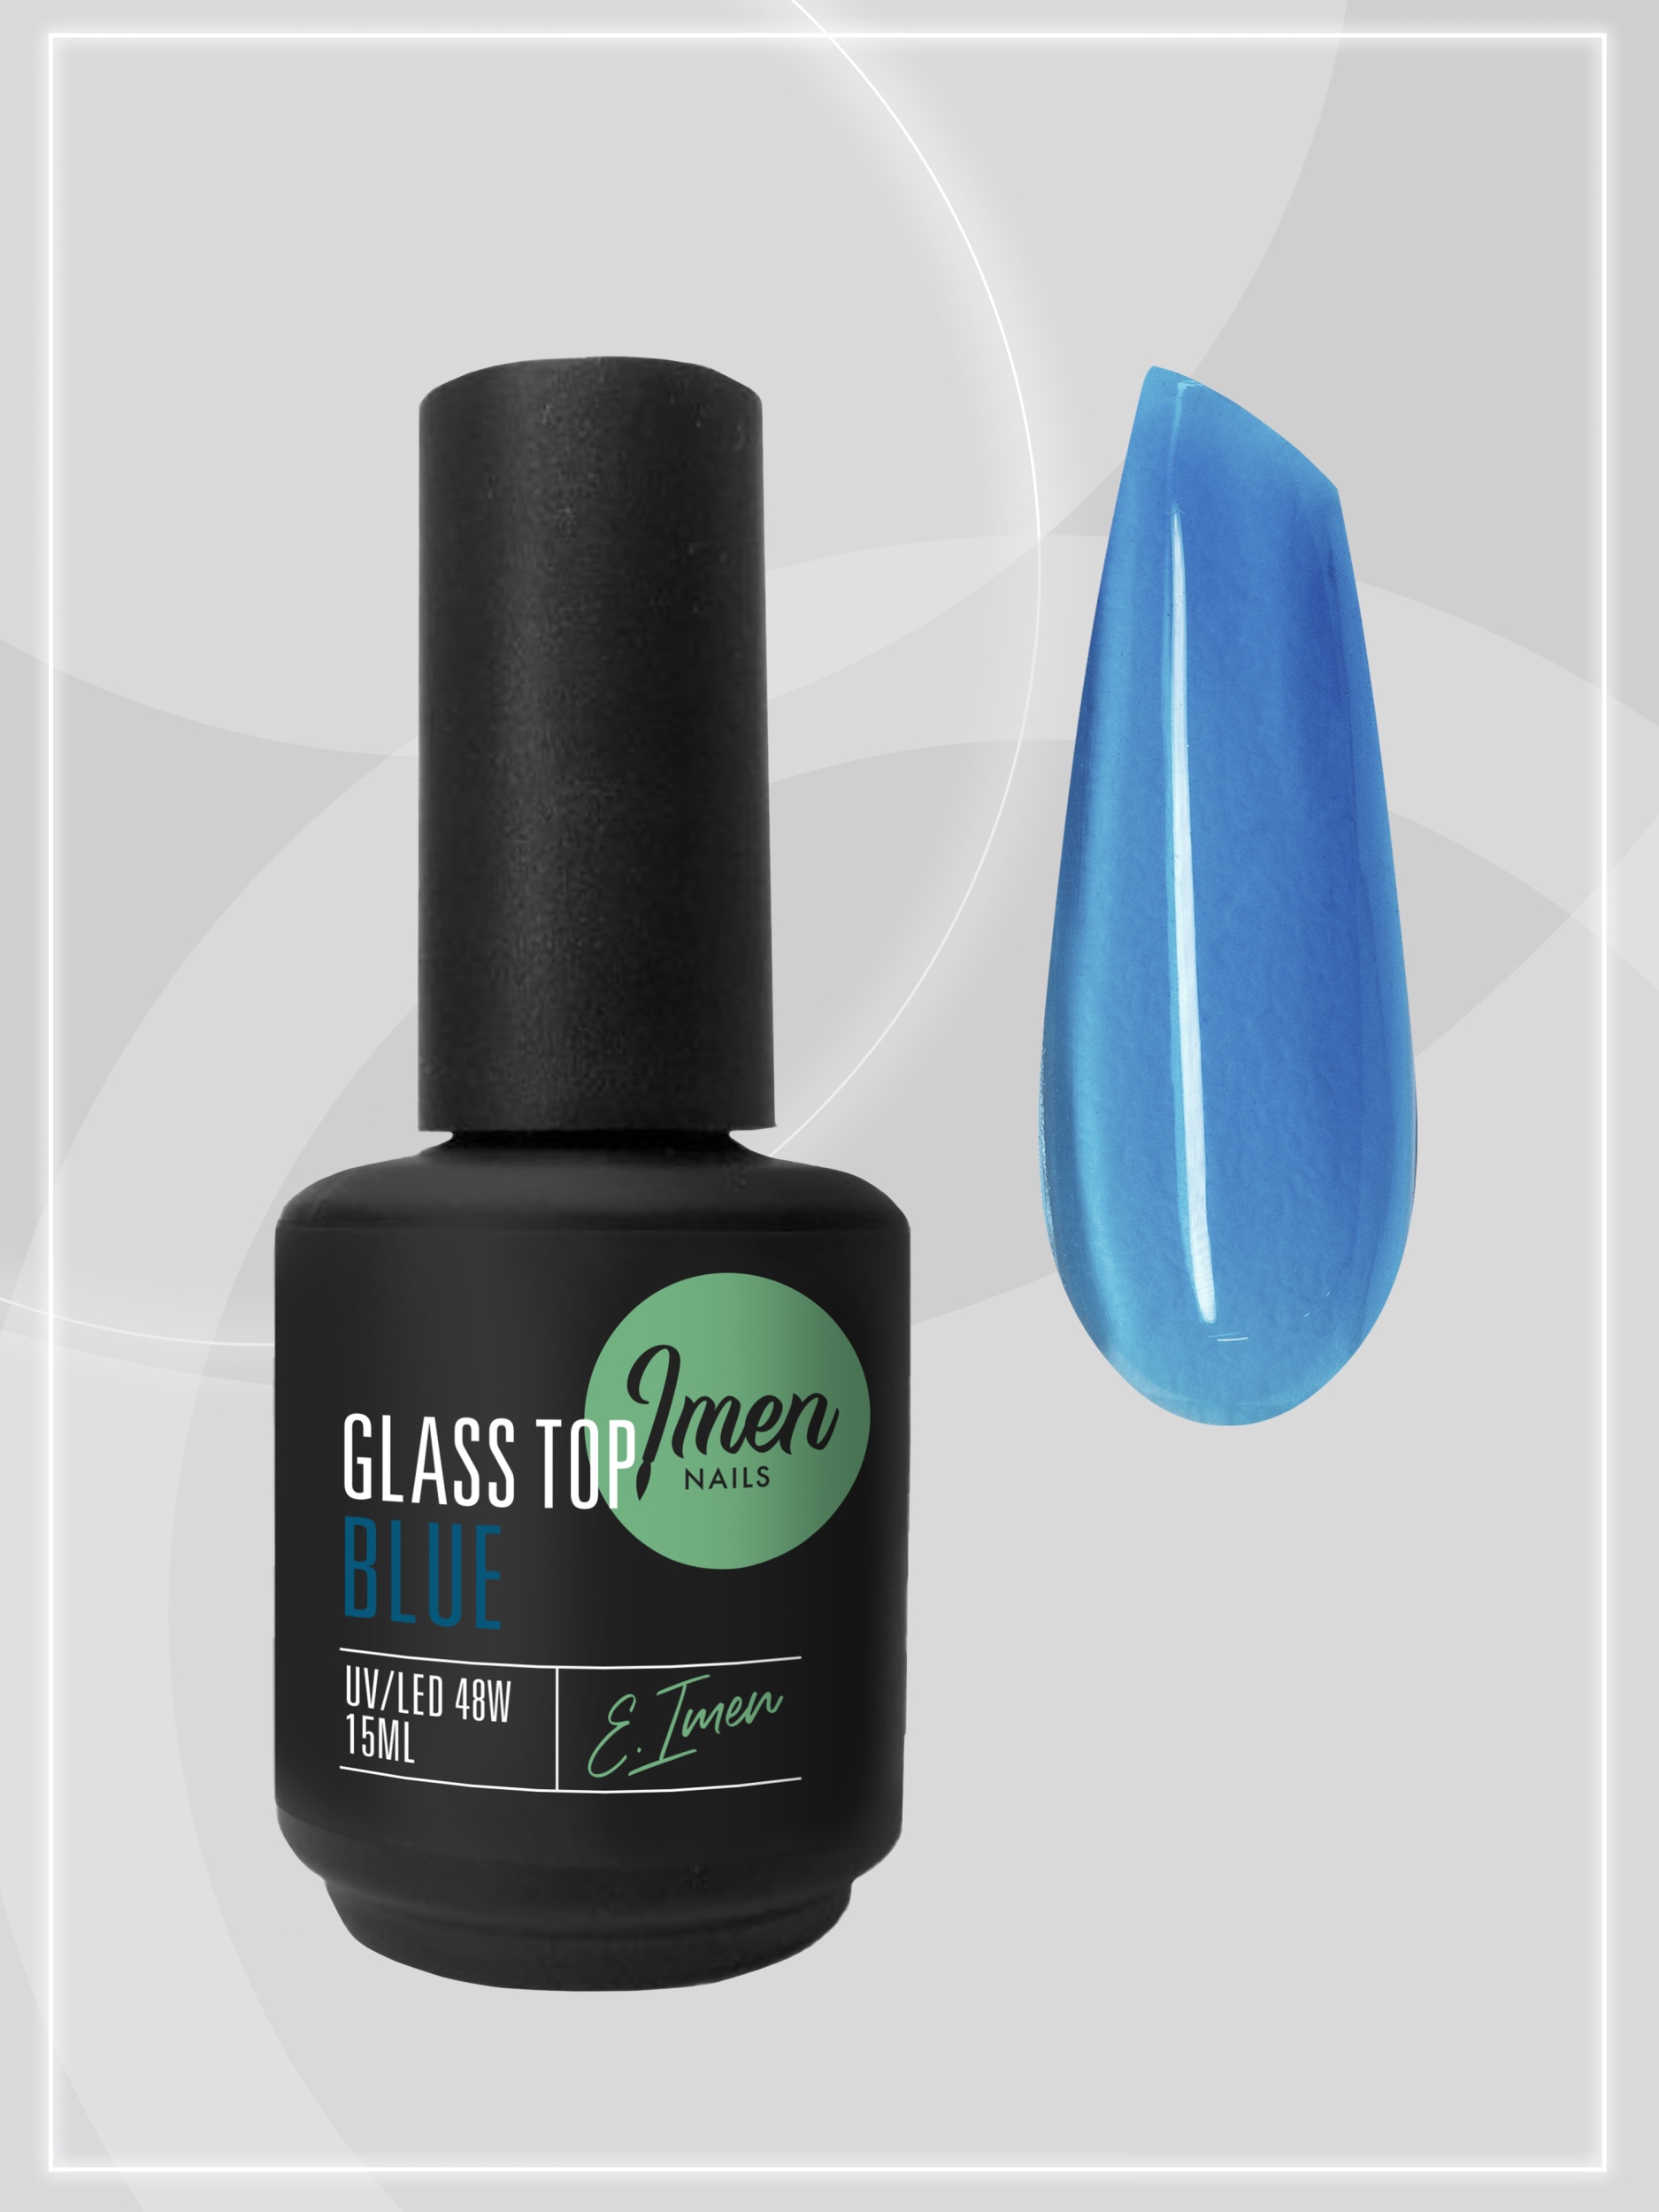 Top Glass Blue (топ витражный без липкого слоя, голубой) Imen, 15мл